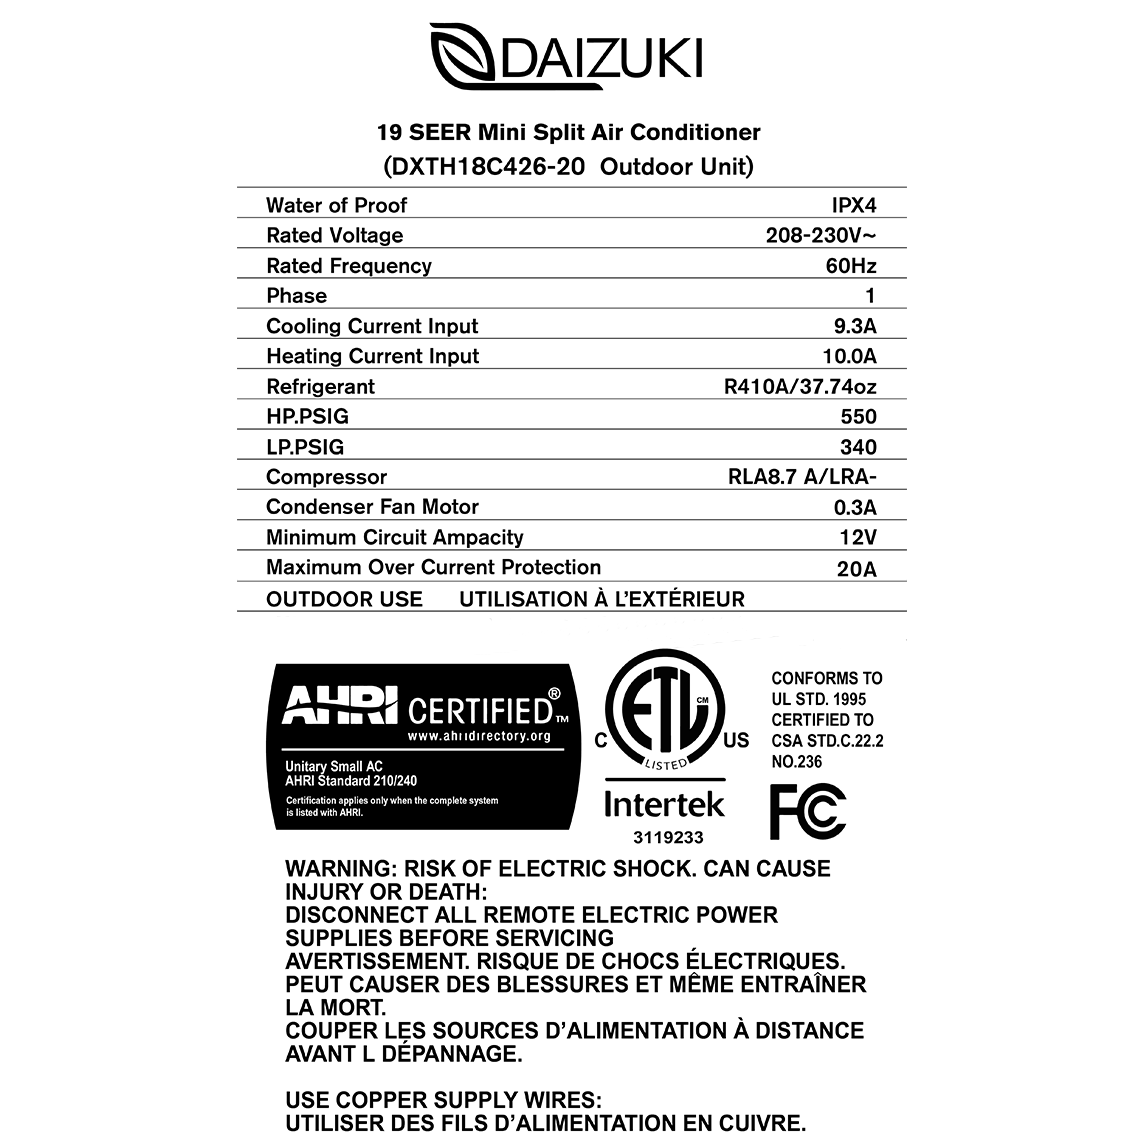 Daizuki - 18000 BTU Air Conditioner Mini Split 20 SEER2 INVERTER Ductless Heat Pump 220V WIFI Included